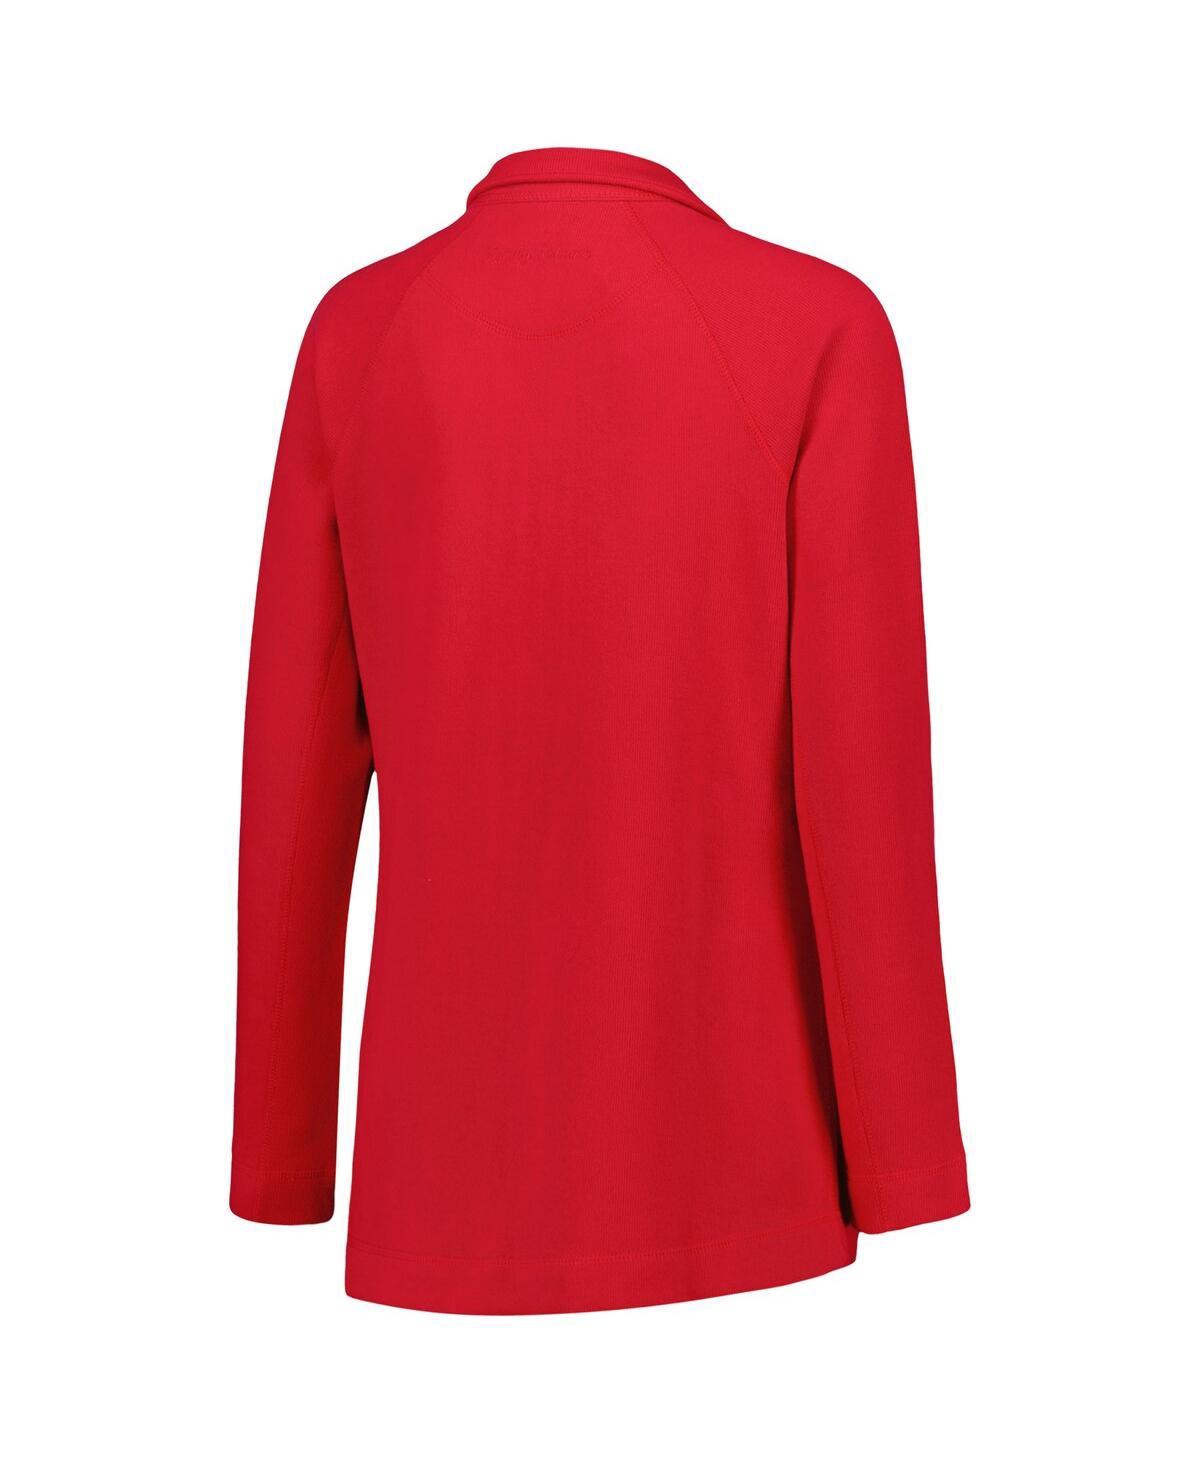 Shop Tommy Bahama Women's  Red St. Louis Cardinals Aruba Raglan Full-zip Jacket